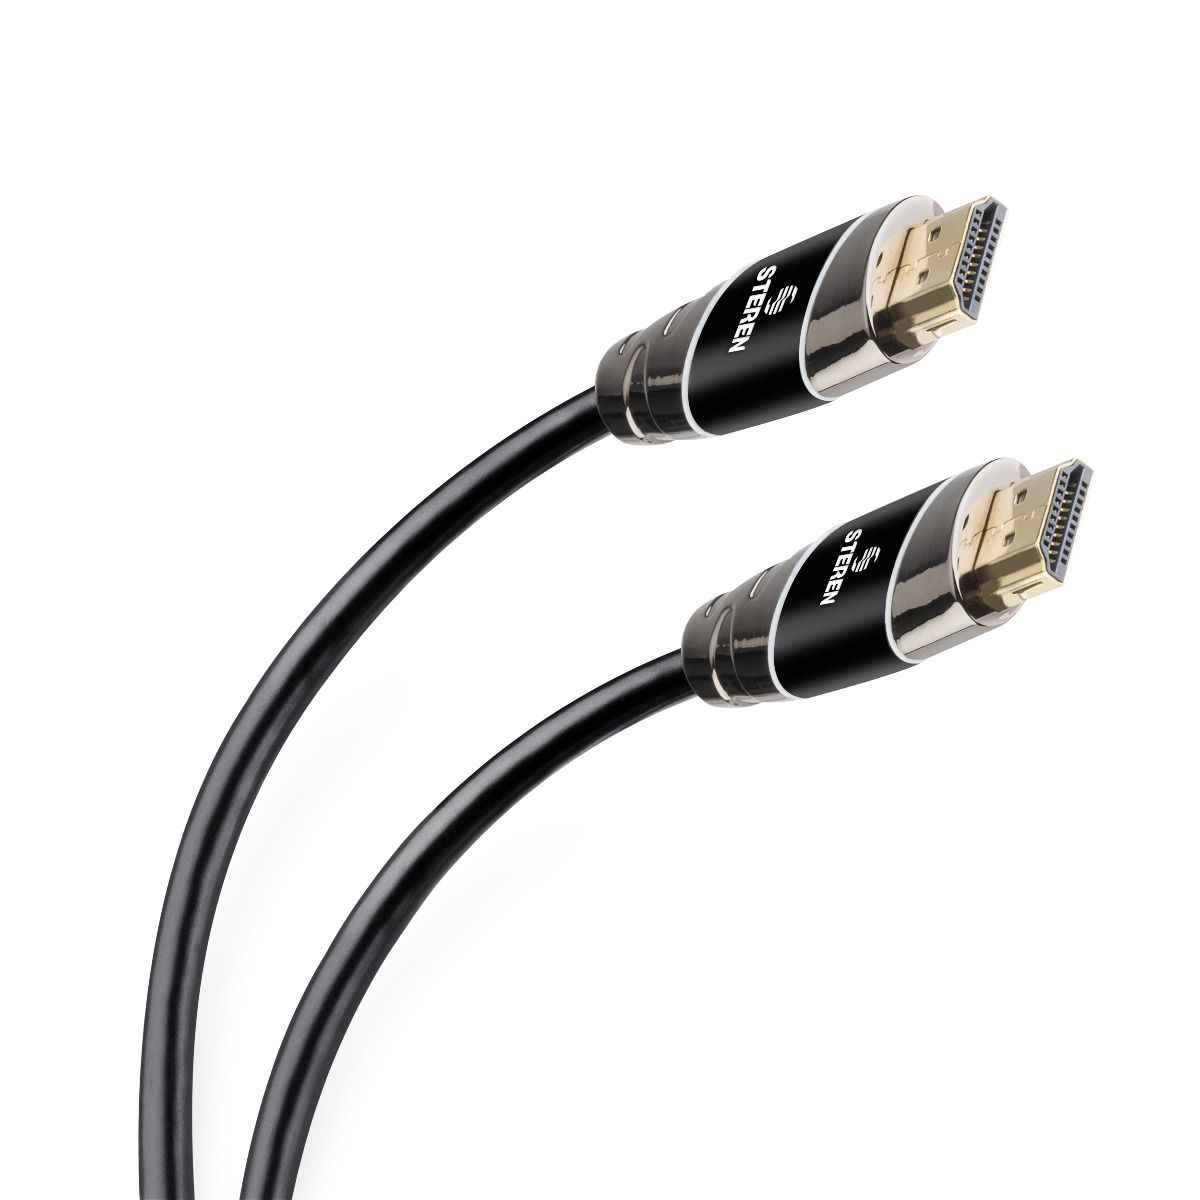 Câble HDMI Plat vers HDMI 4K - 15 m